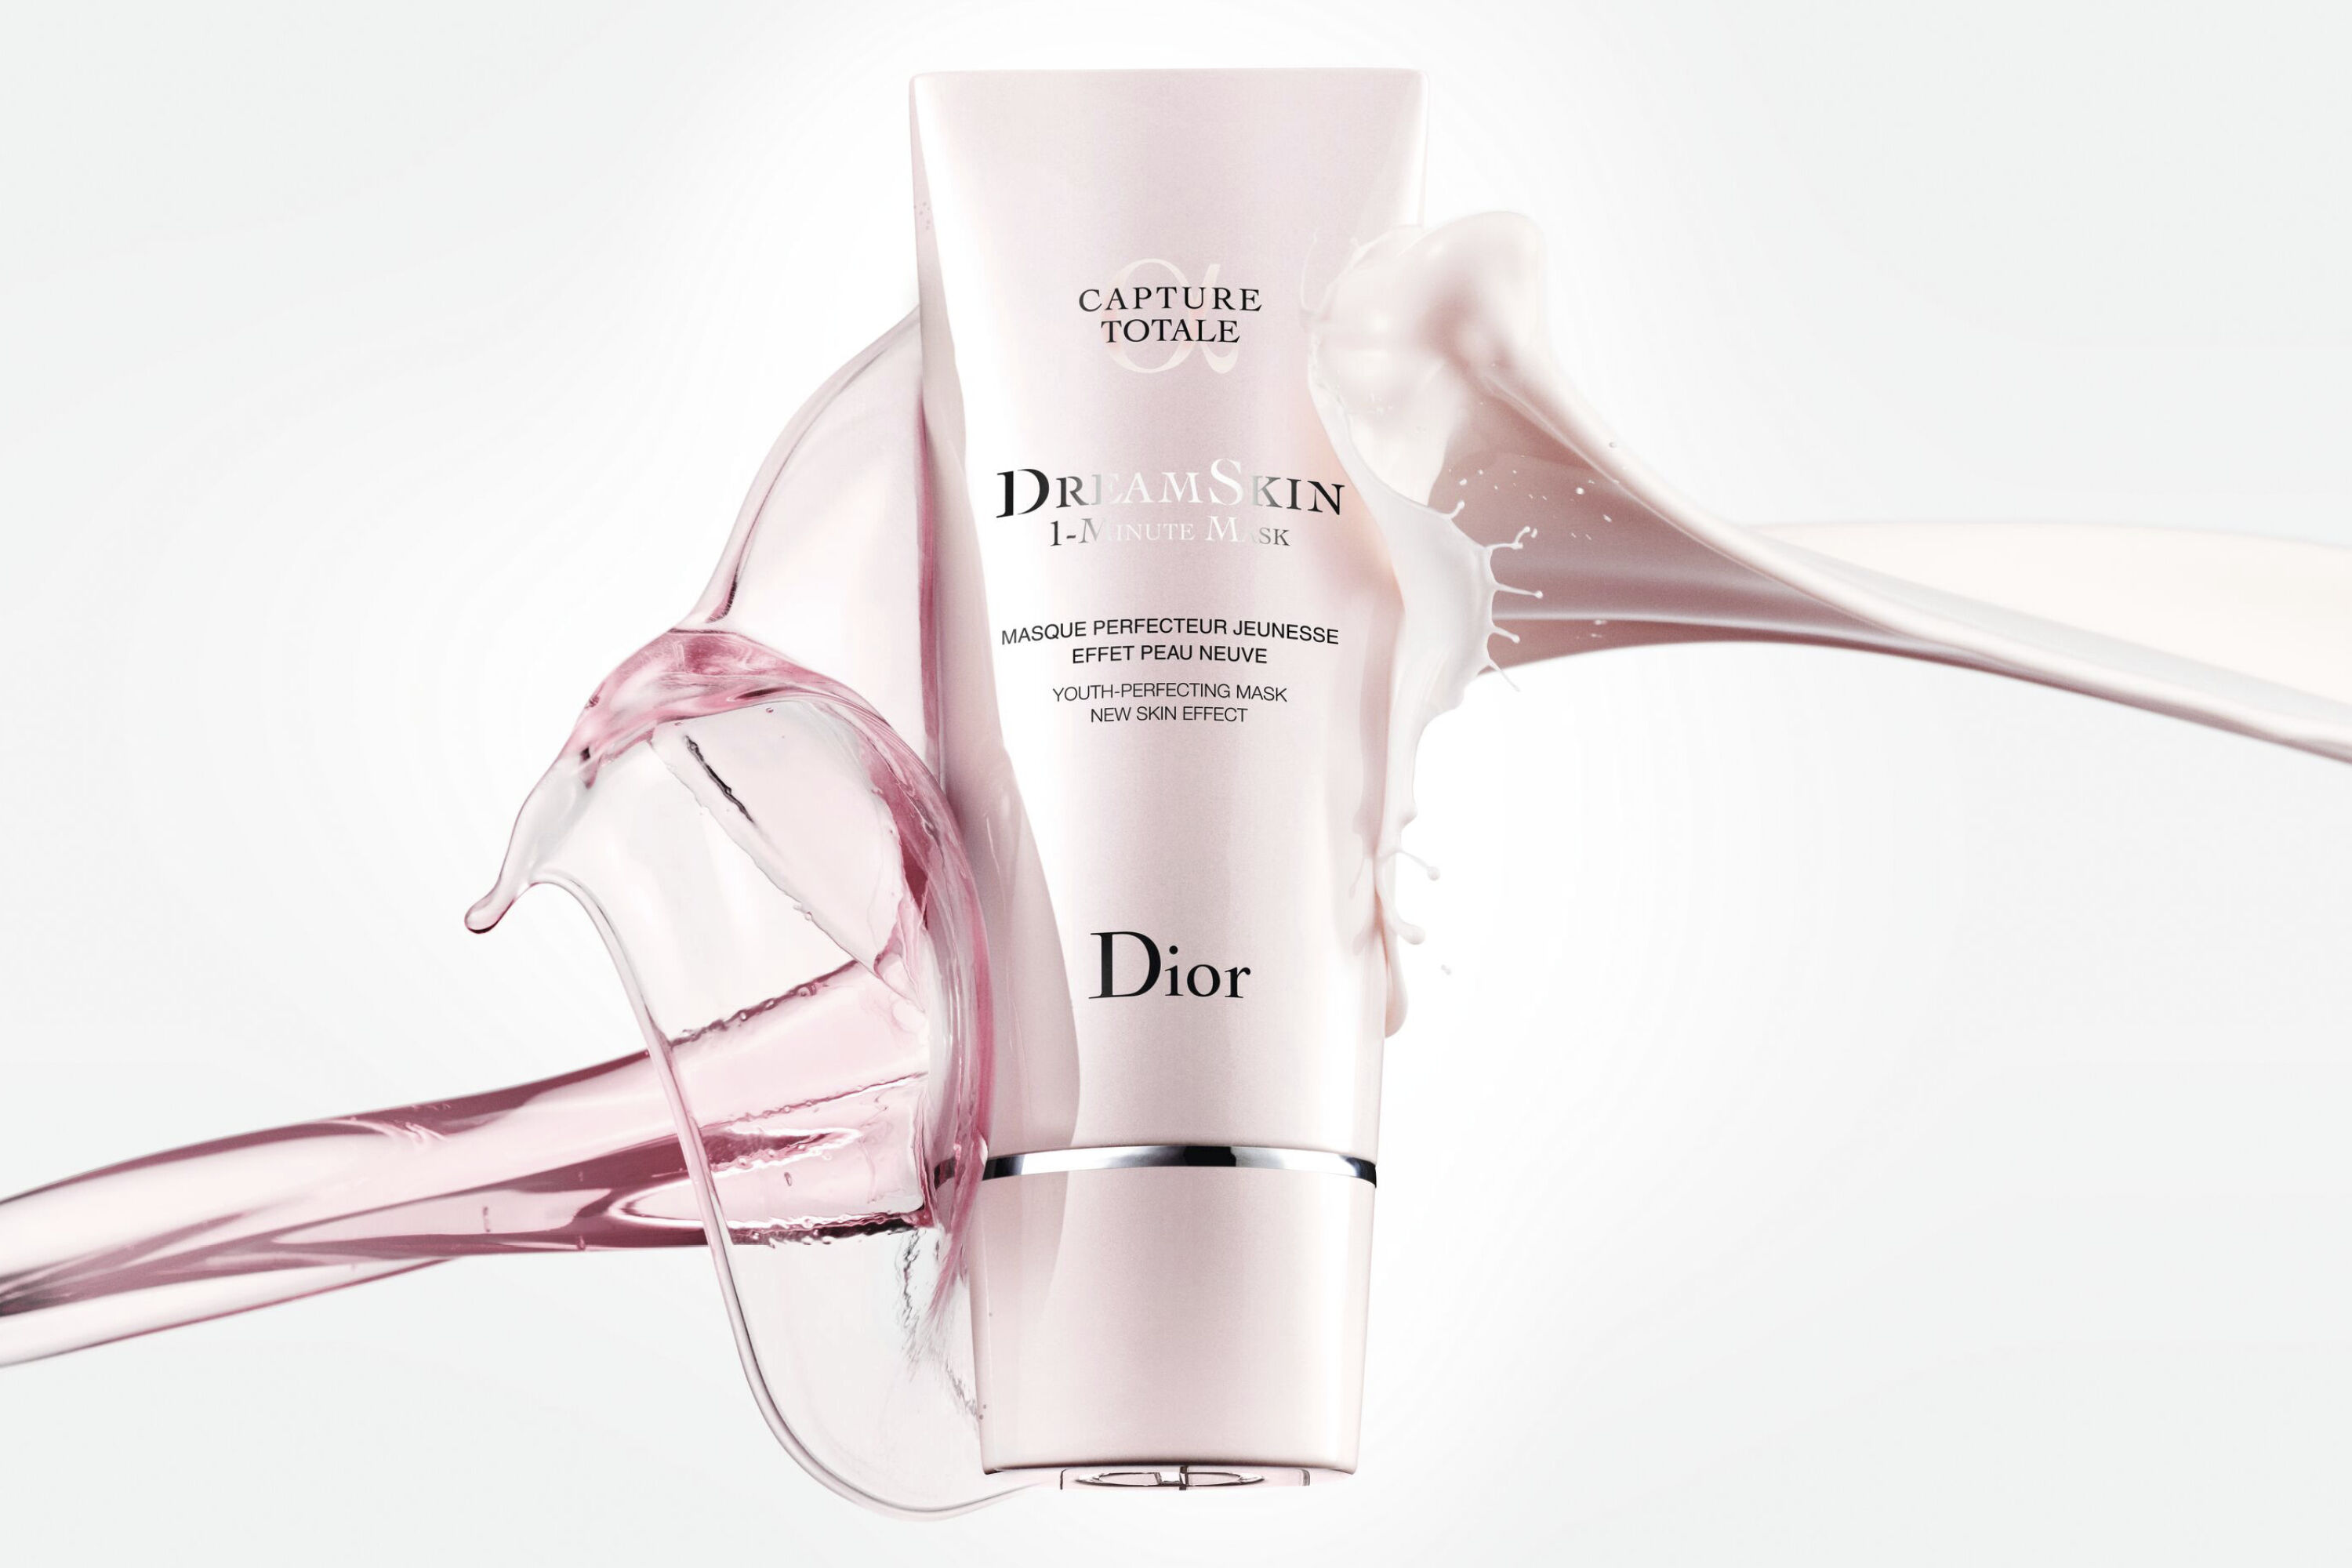 Dior Capture Totale DreamSkin 1-Minute Mask